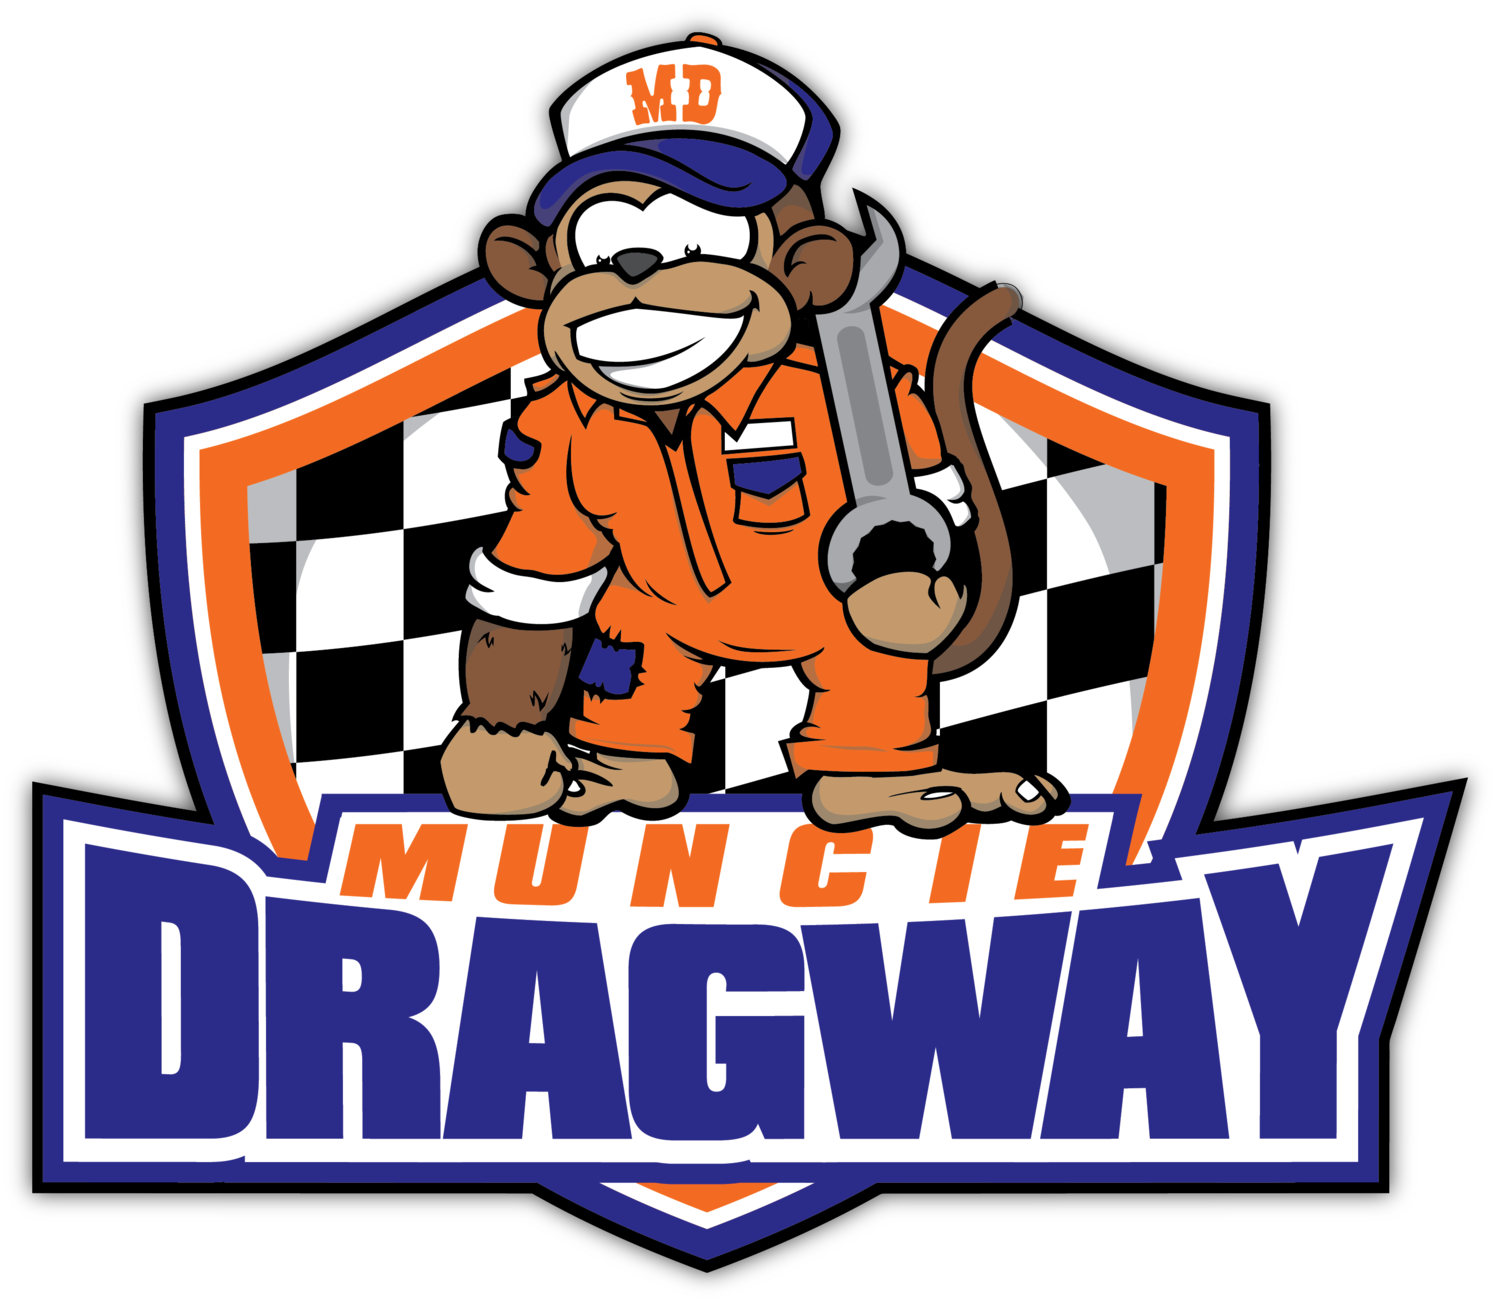 Muncie Dragway logo